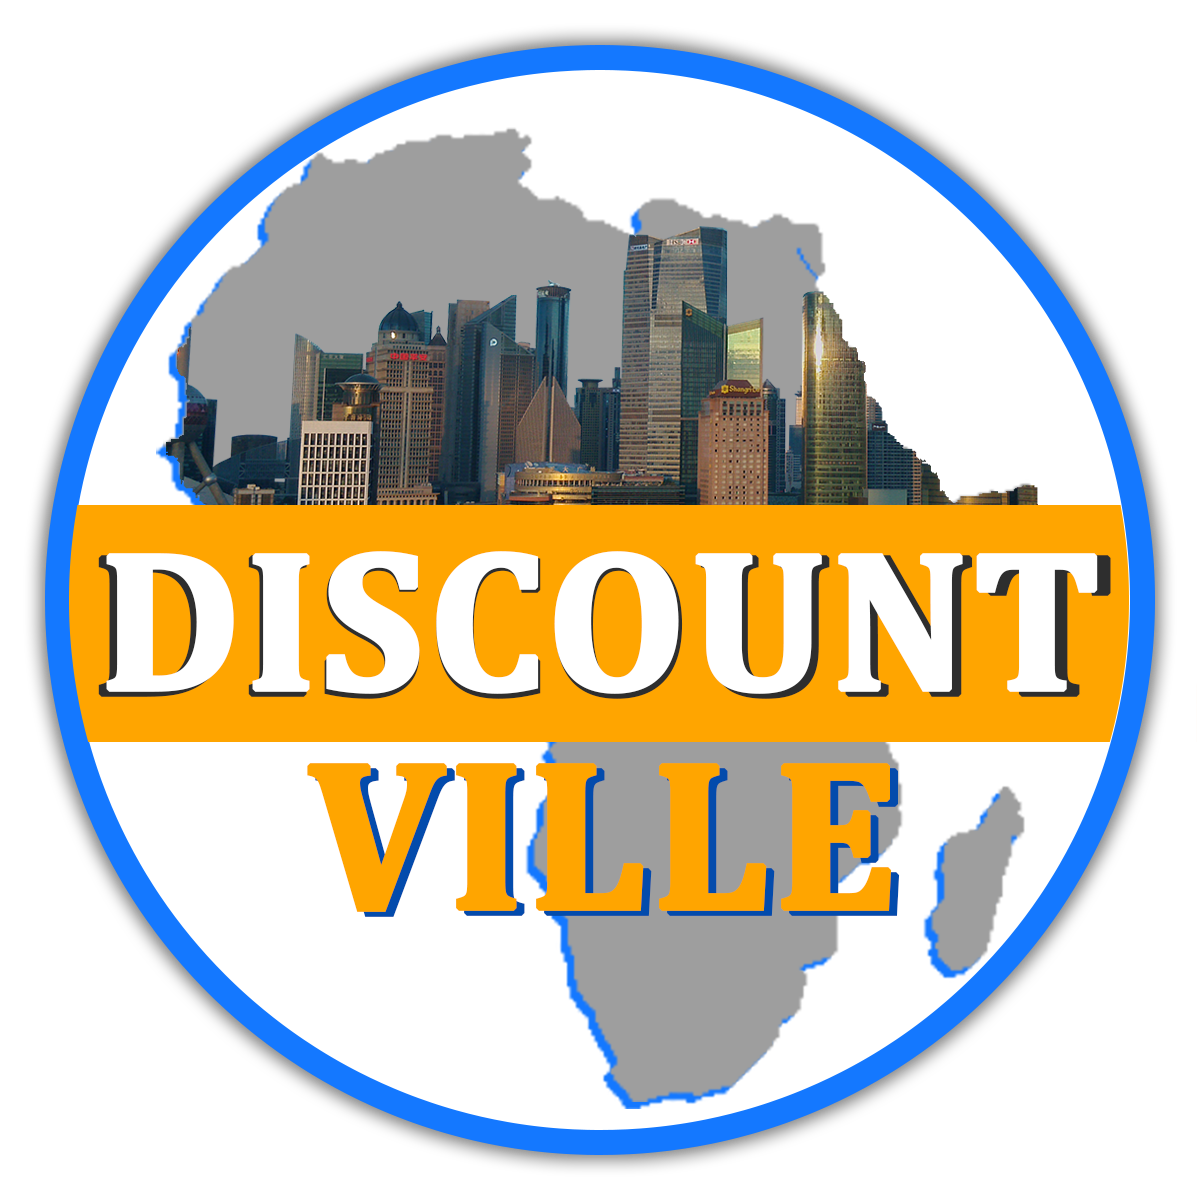 Discount Ville Logo